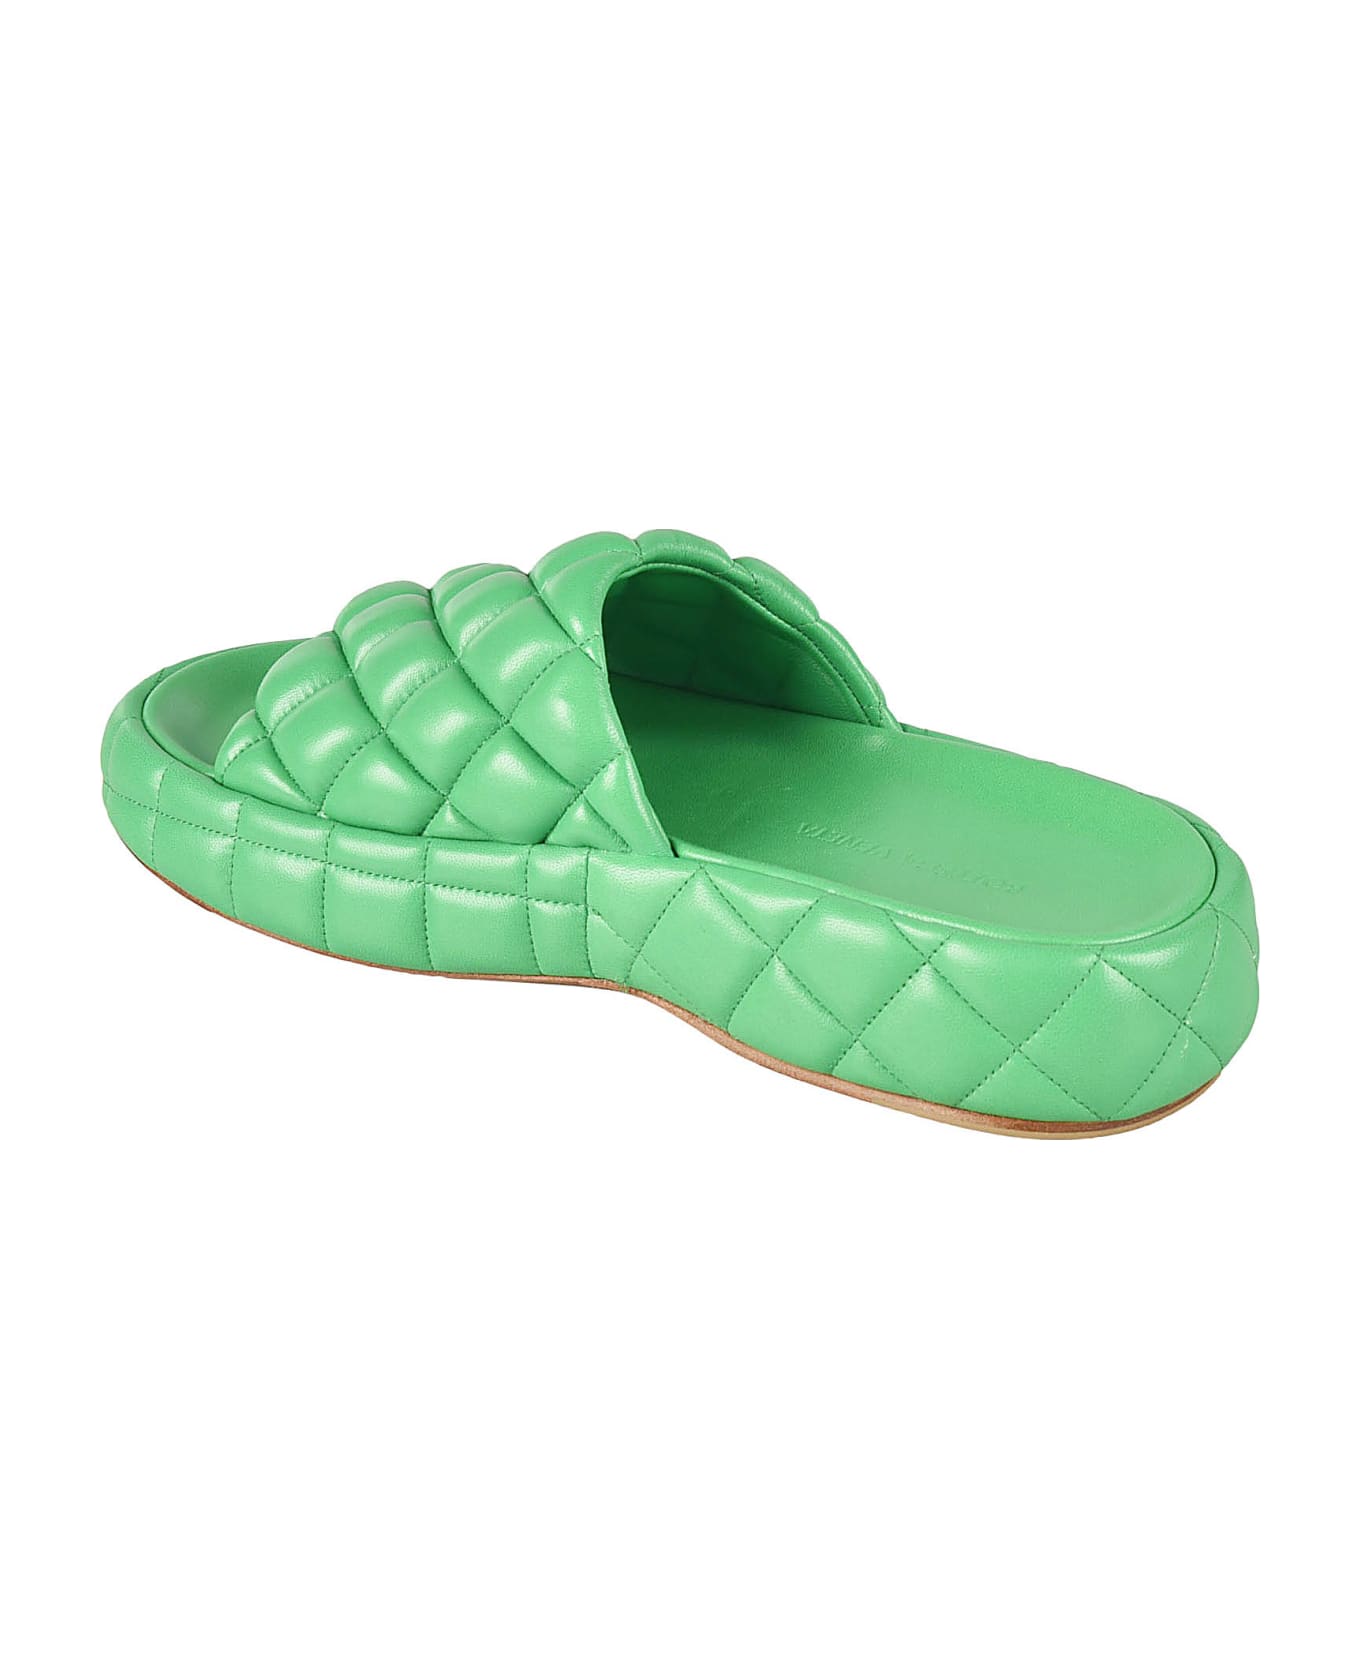 Bottega Veneta Padded Flat Sandals - Parakeet